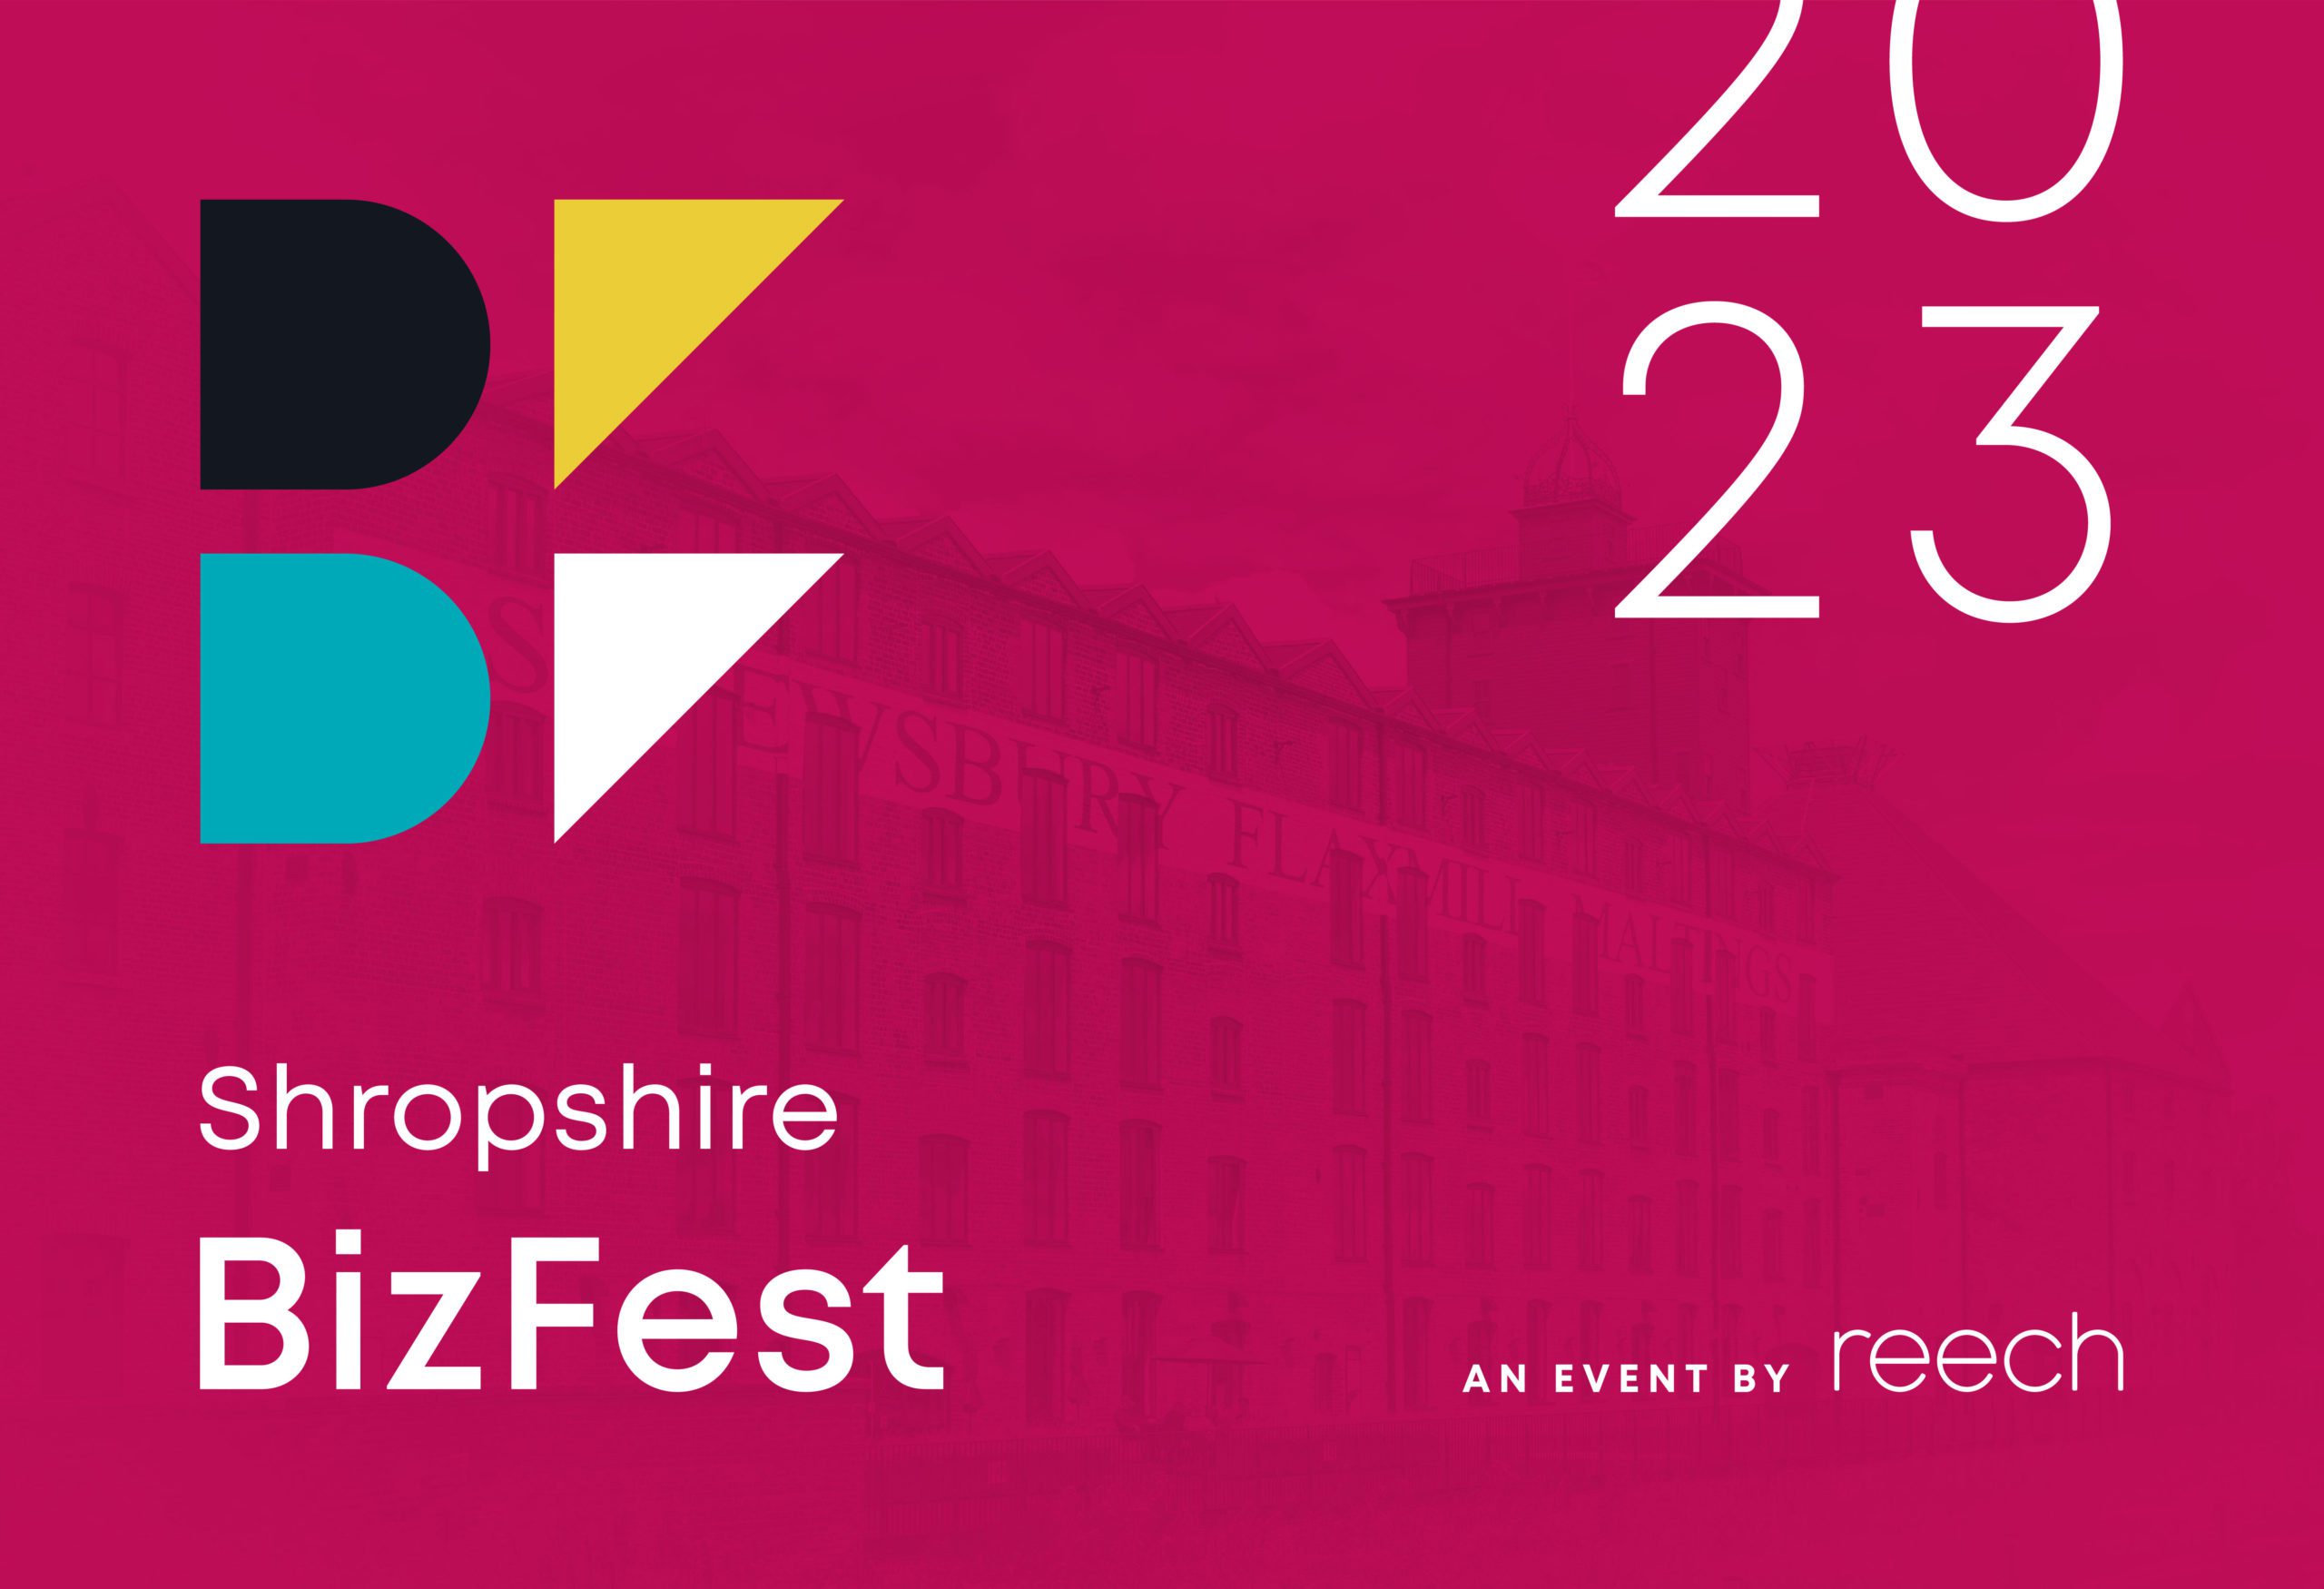 Join us at Shropshire BizFest